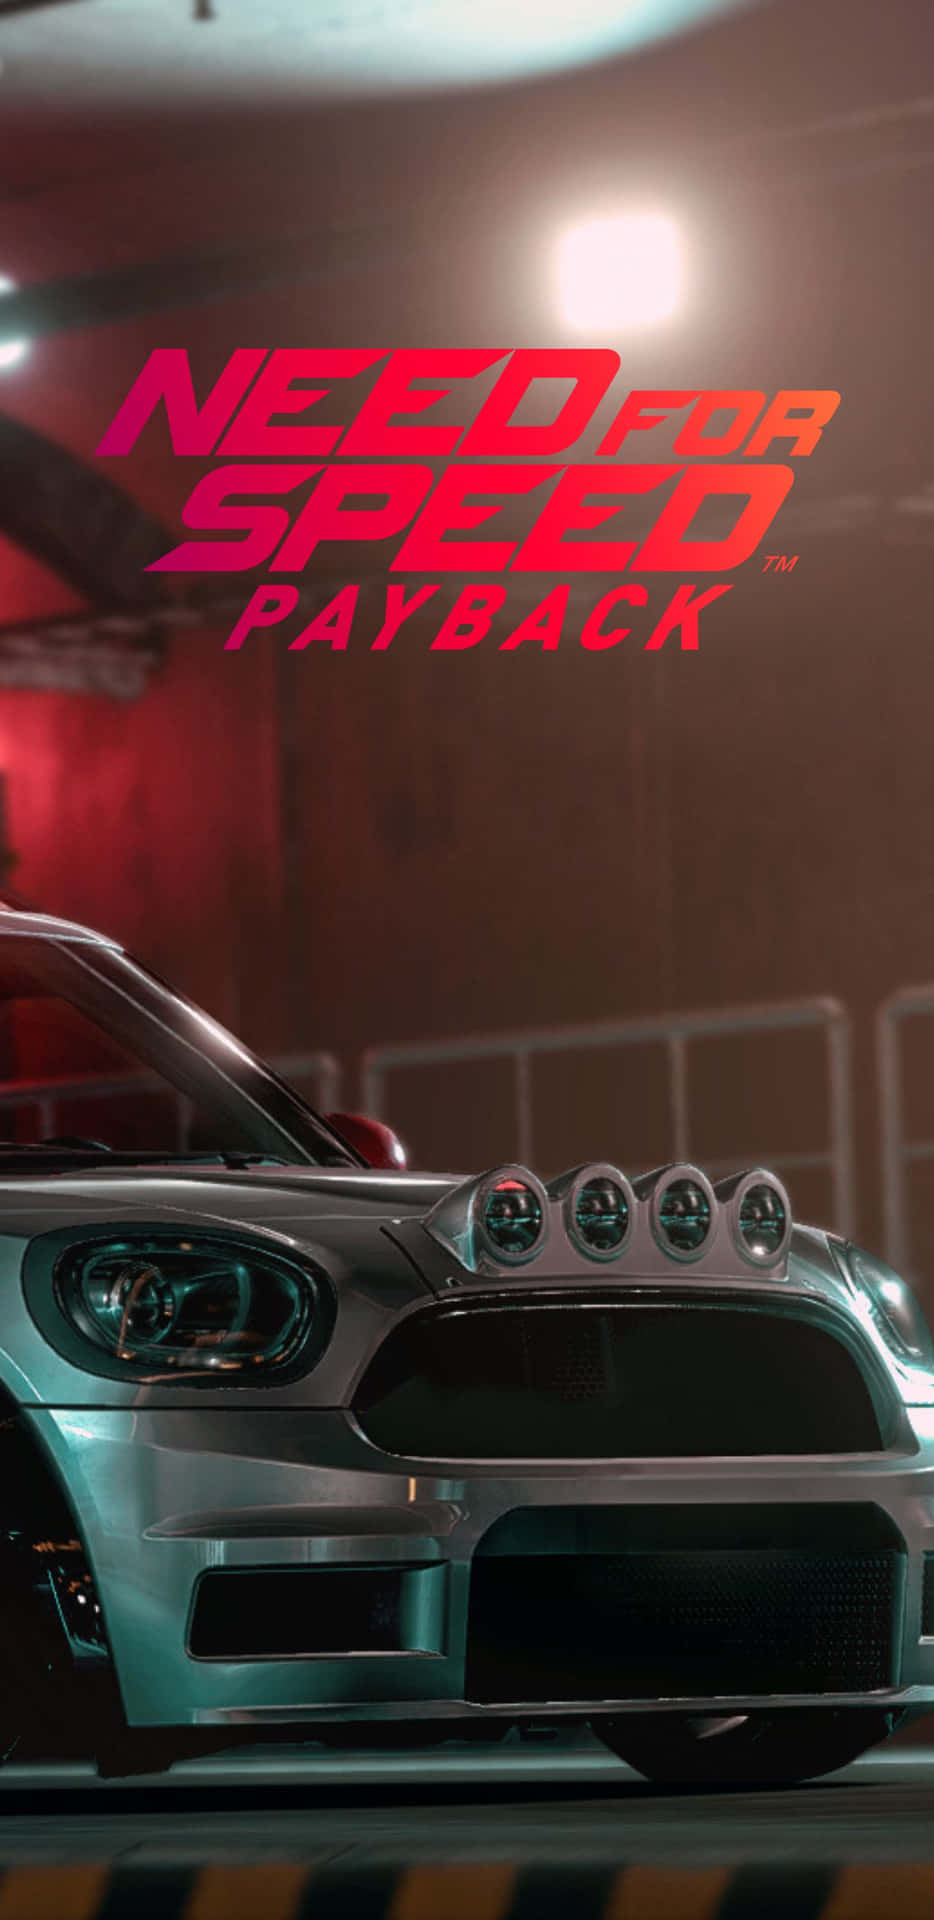 Goditil'emozione Di Need For Speed Payback Su Pixel 3xl